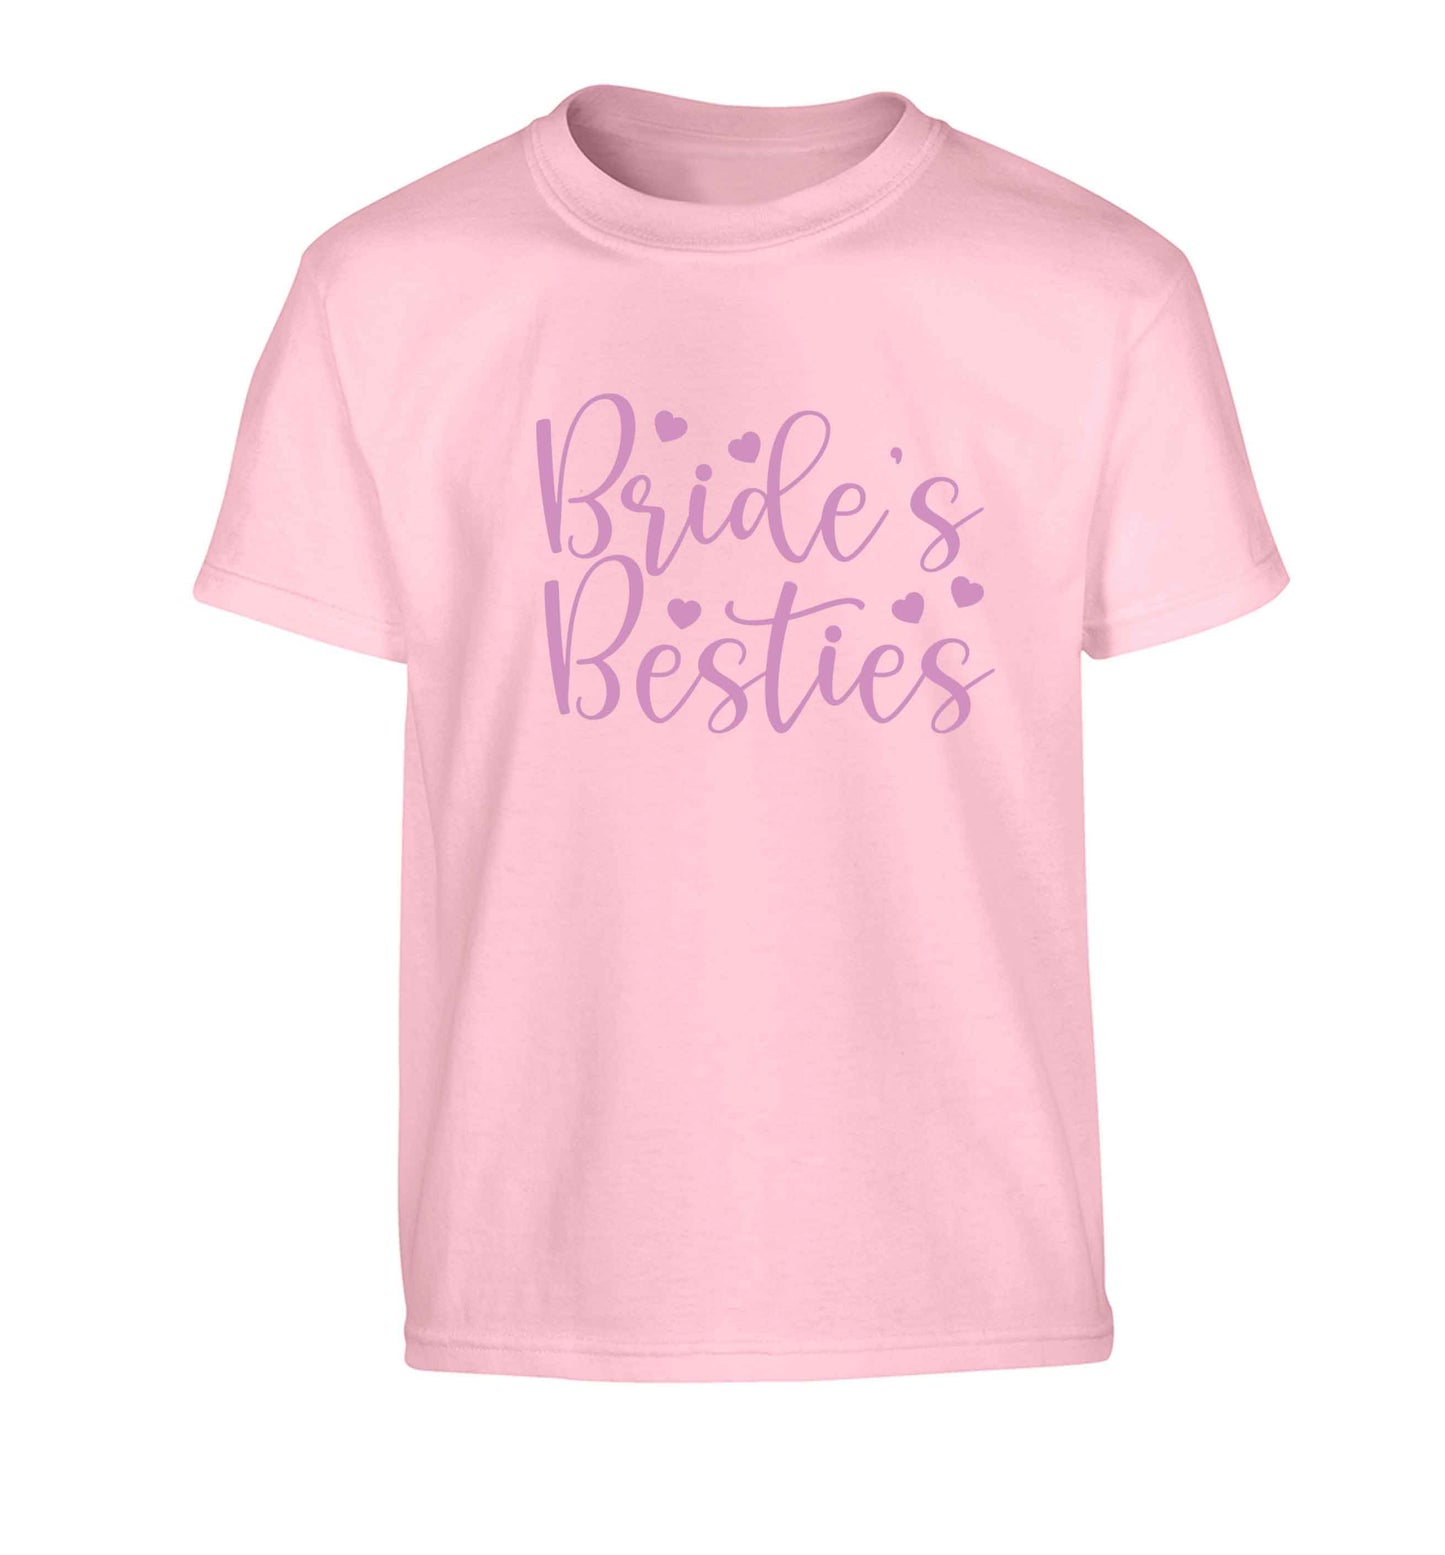 Brides besties Children's light pink Tshirt 12-13 Years